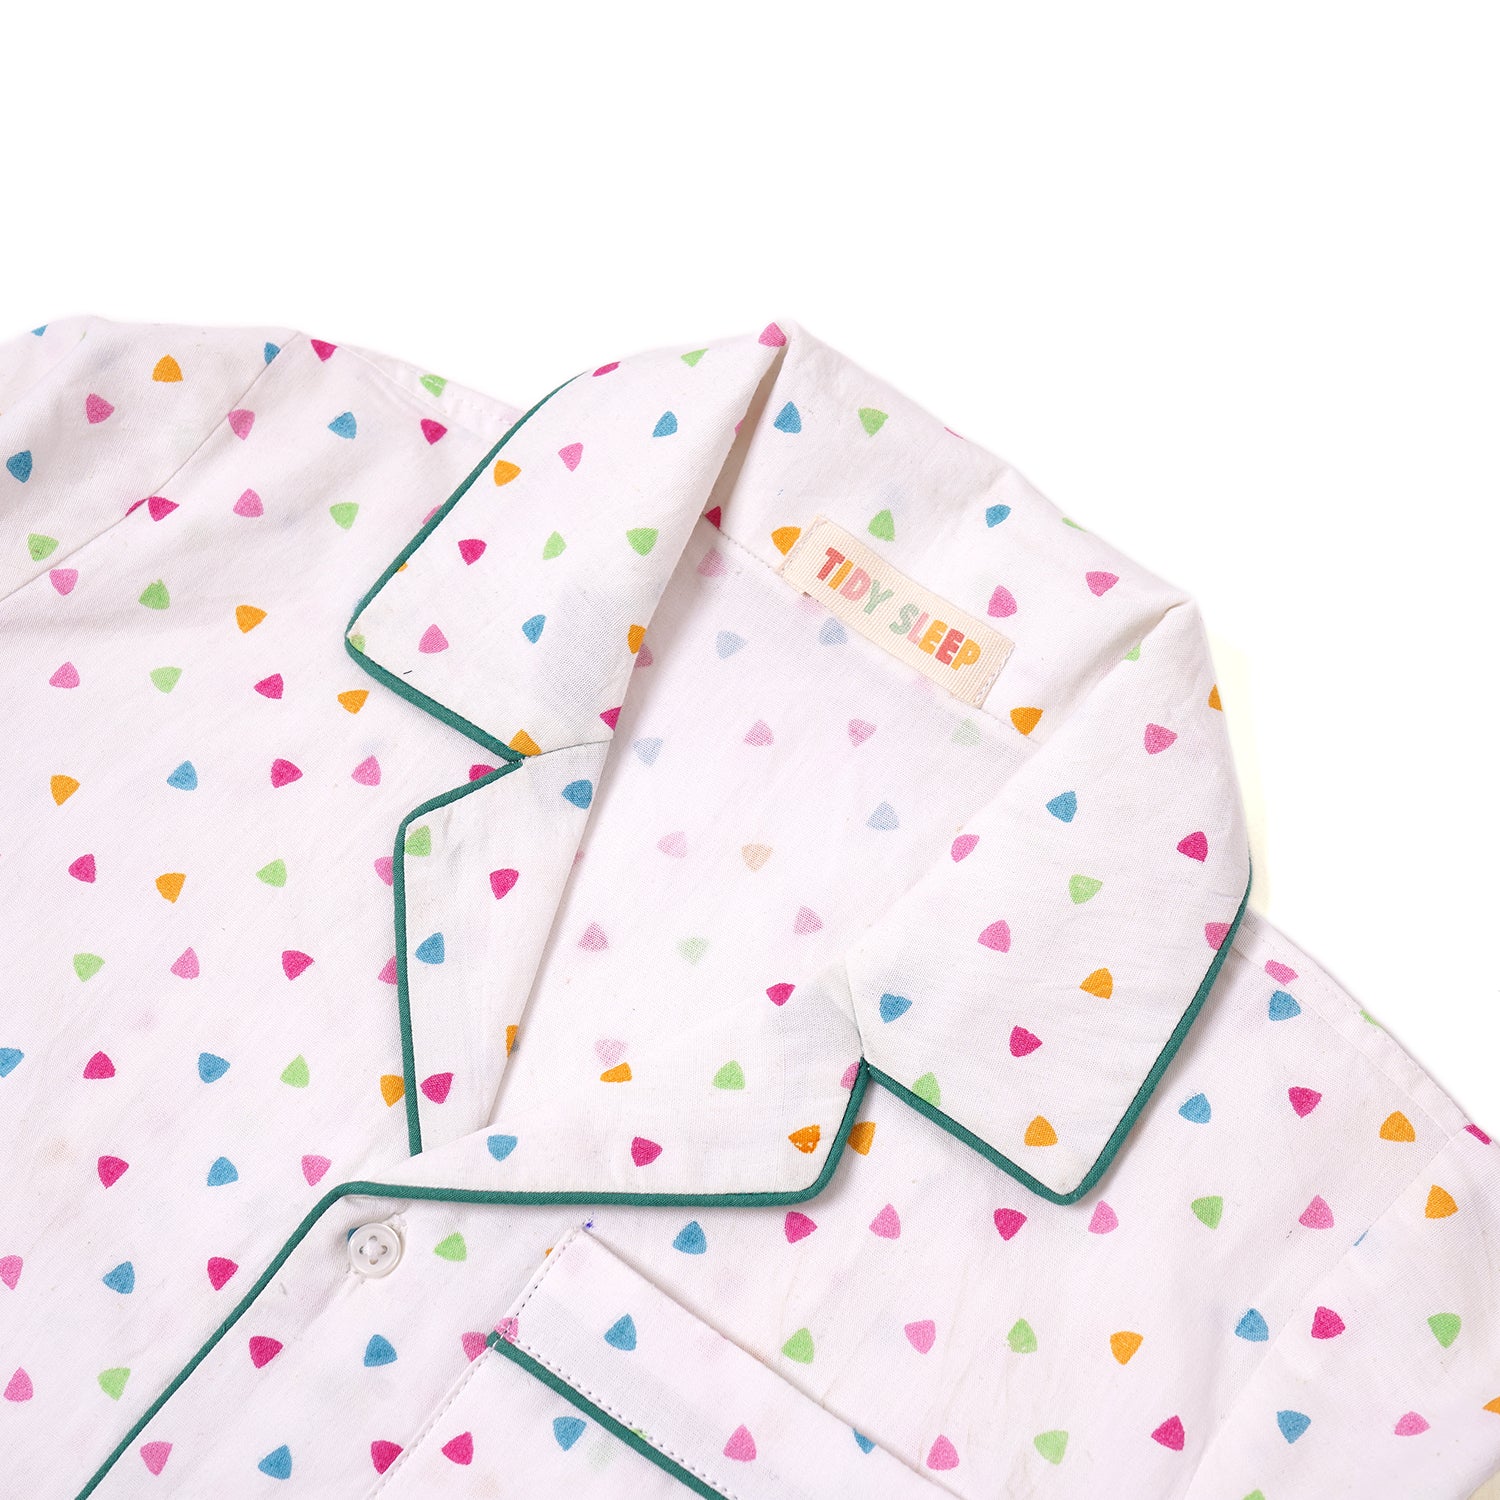 100% Cotton | TRIANGLE PRINT Baby Boys Night Suit | Nightwear | Sleepwear for Baby/Kids